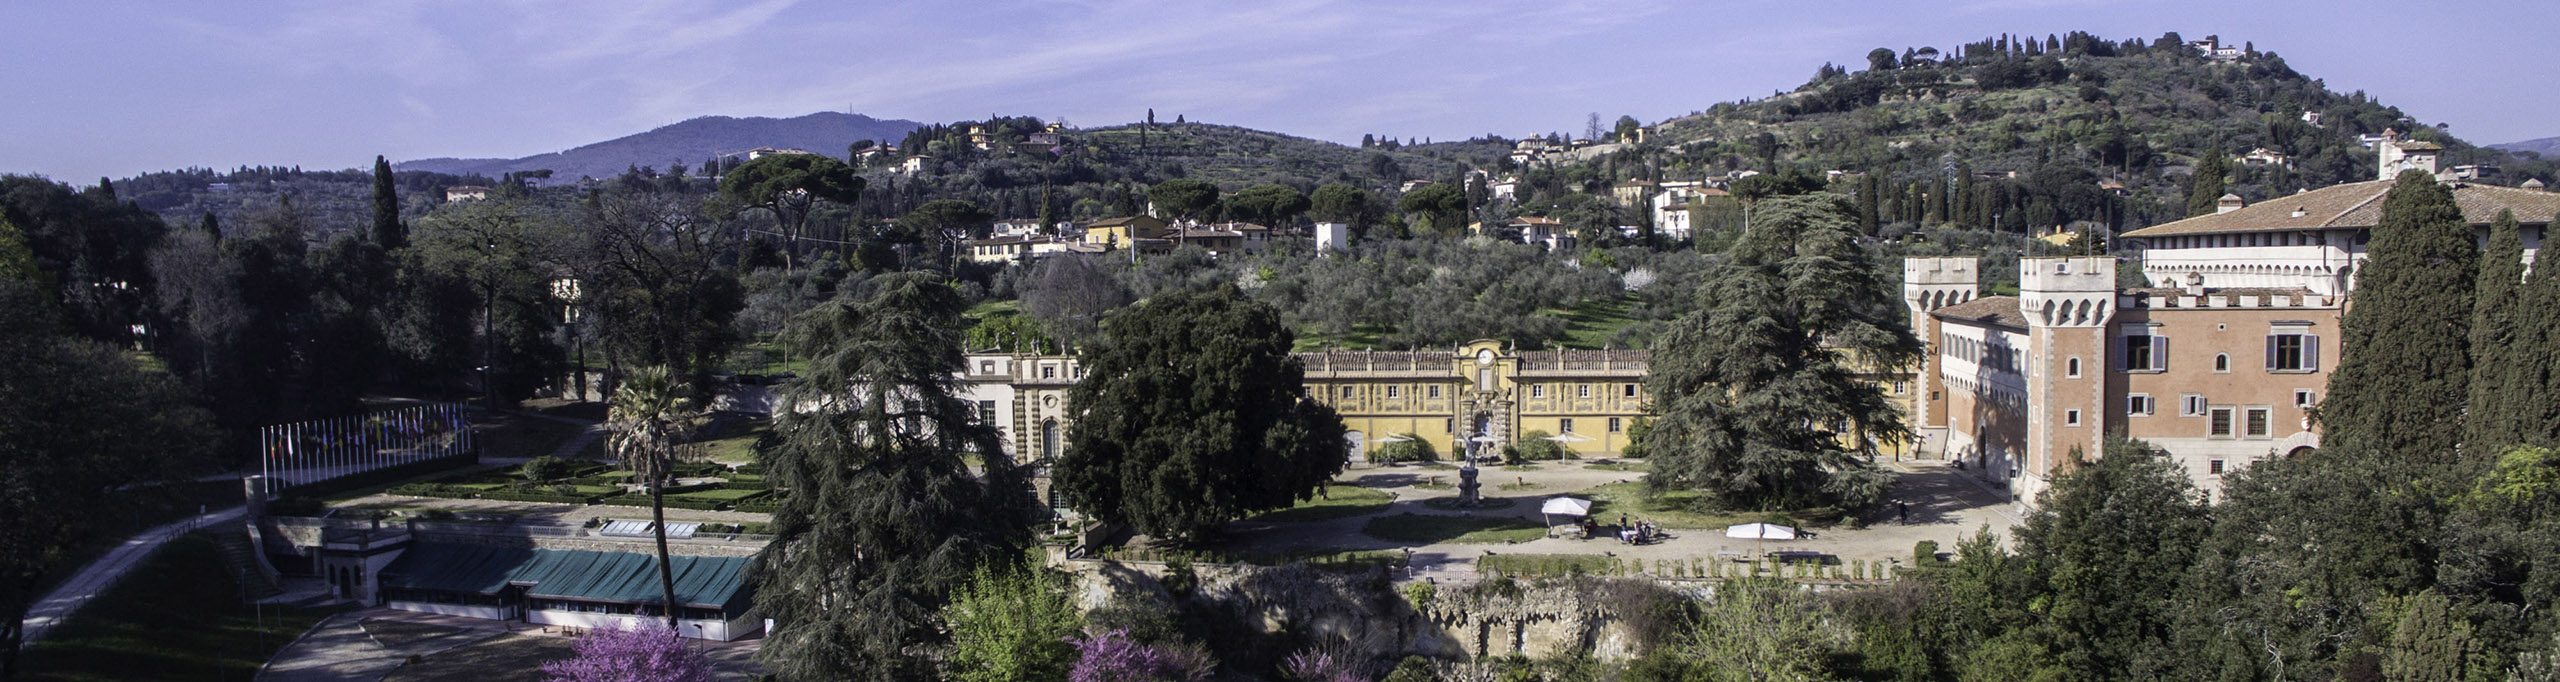 Villa Salviati banner